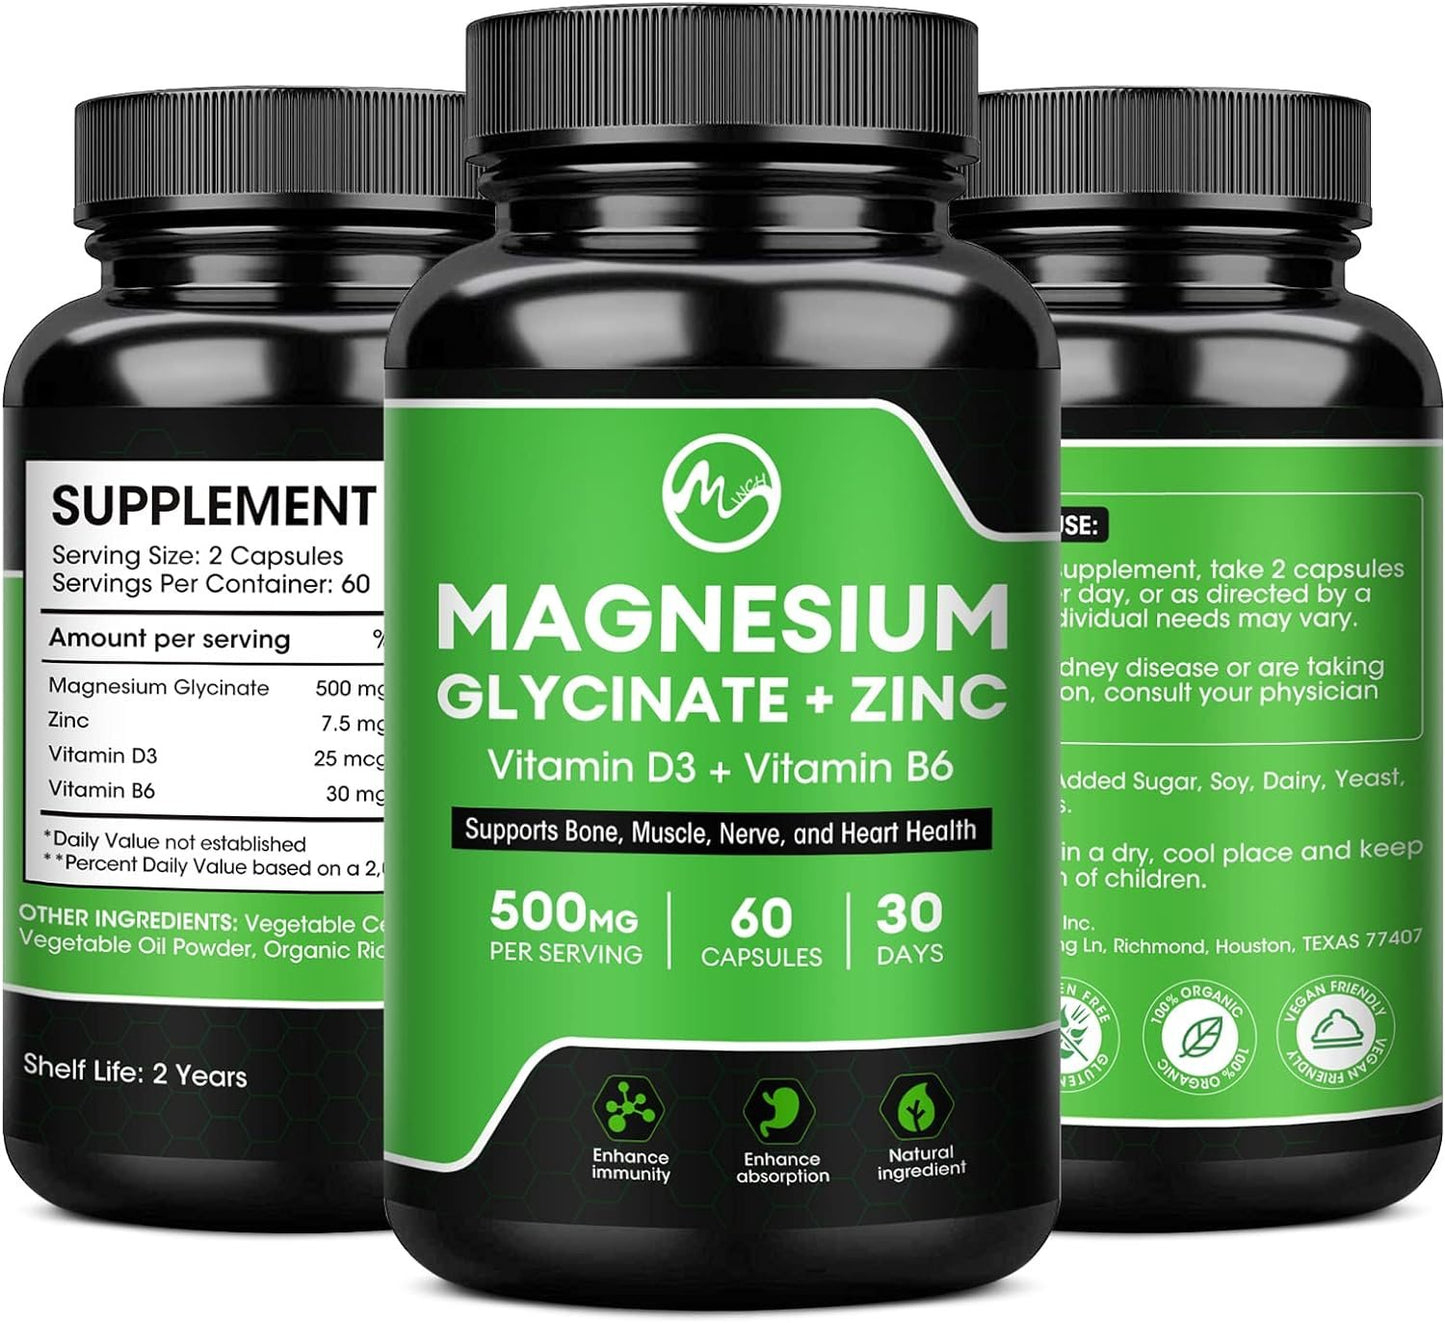 Magnesium Glycinate Capsules, Magnesium Supplement with Magnesium Glycinate 500mg Zinc Vitamin D3 & B6 - Promotes Nerve, Bowel, Relaxation Function - 60 Vegan Capsules for Women & Men